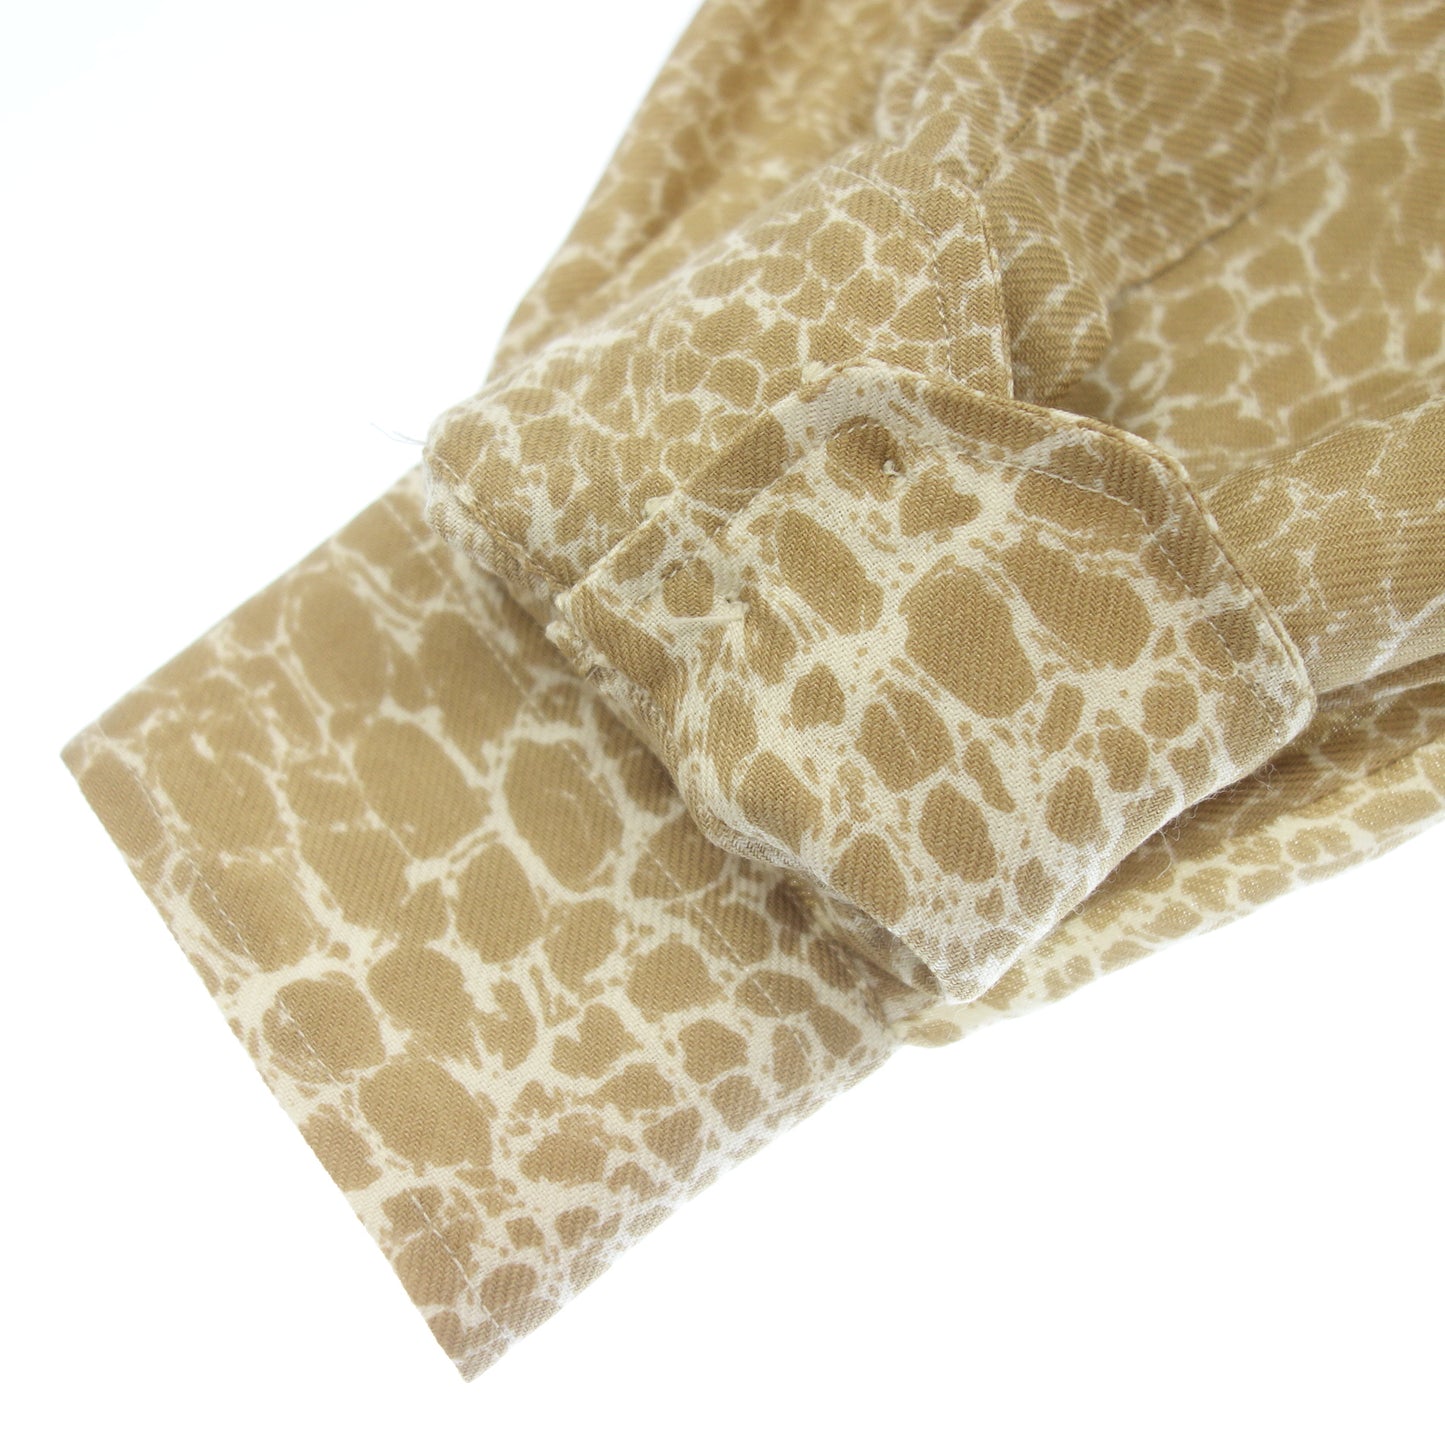 Very good condition◆CELINE long sleeve shirt giraffe pattern silk beige size 38 ladies CELINE [AFB6] 